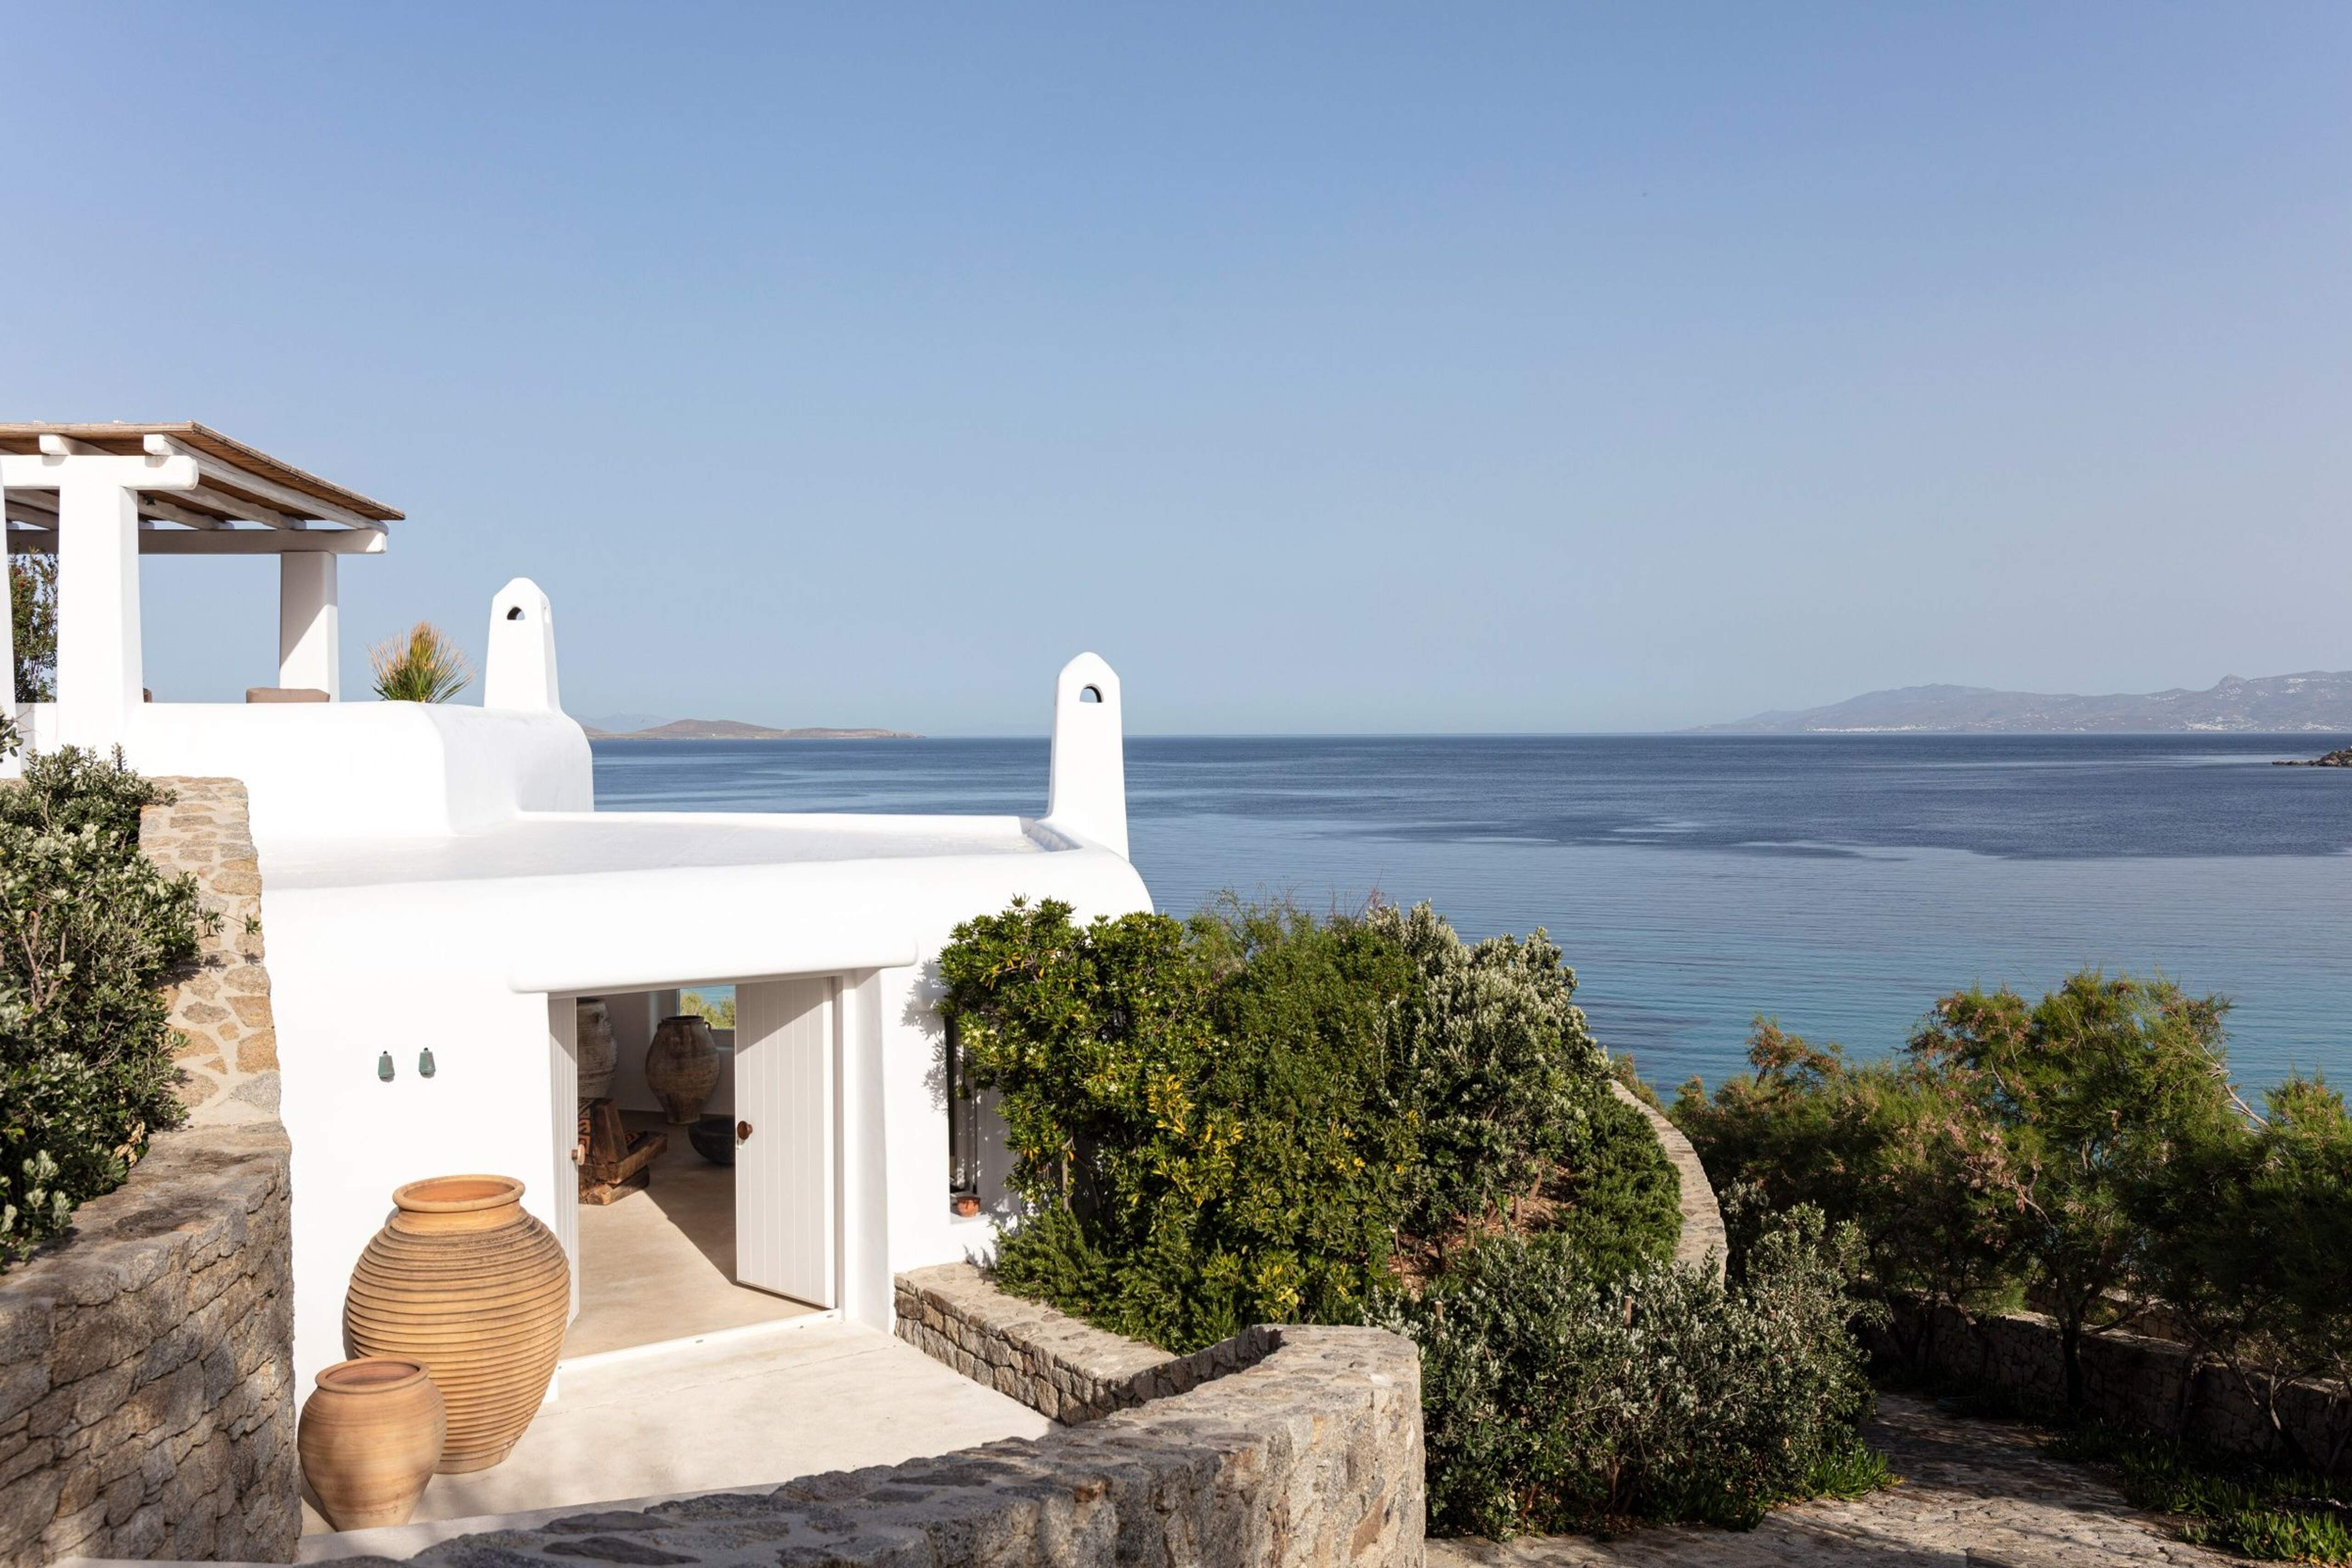 Premium Photo  Beautiful nature landscape of greece island with luxury  boat mediterranean sea water travel summer